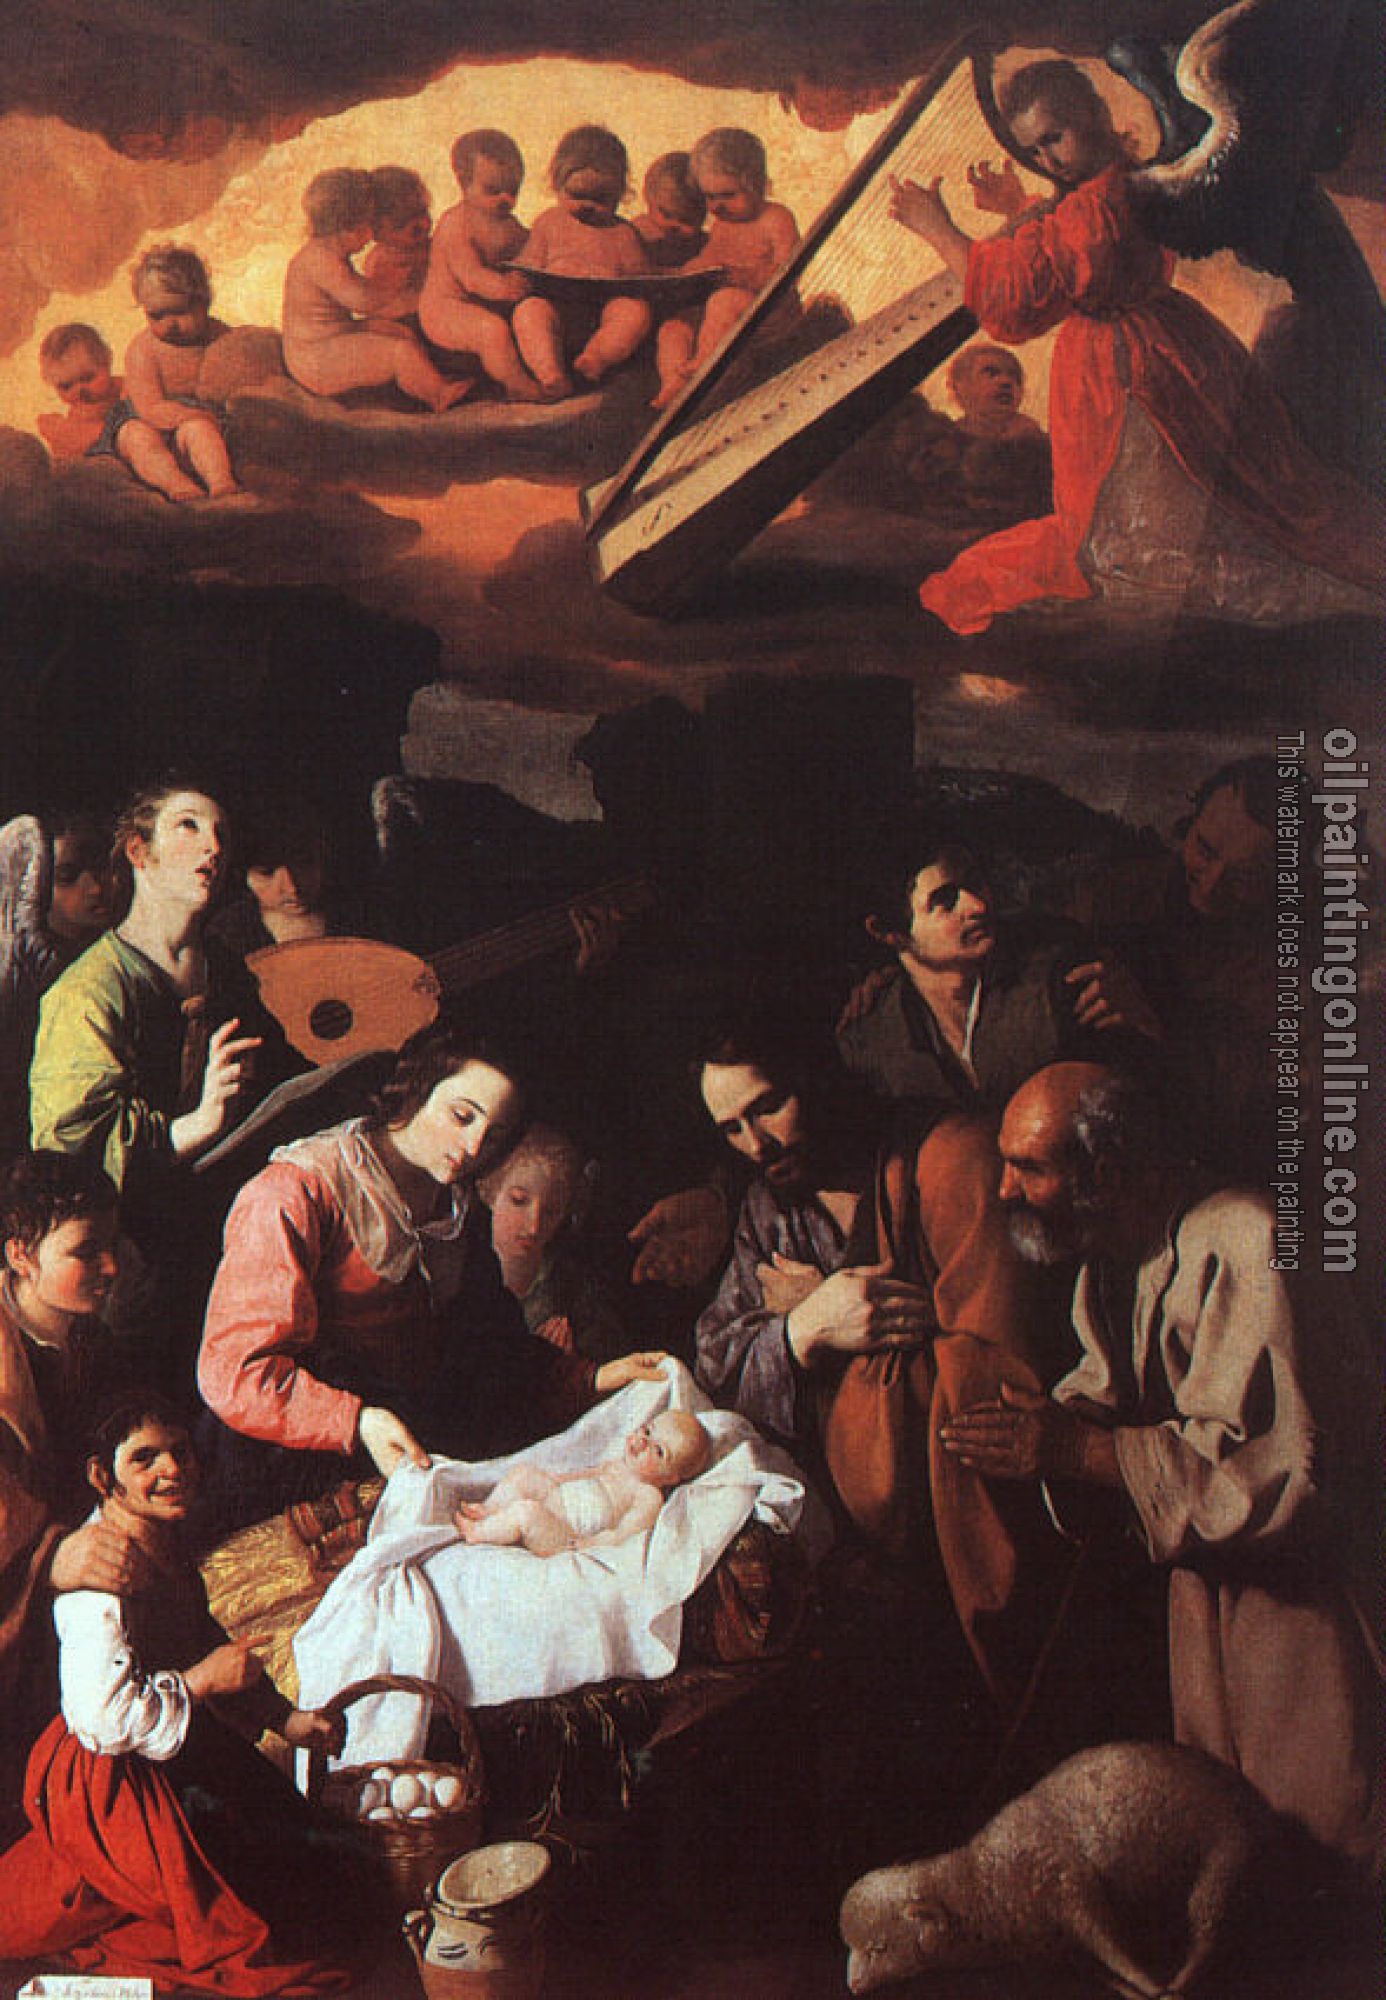 Zurbaran, Francisco de - The Adoration of the Shepherds